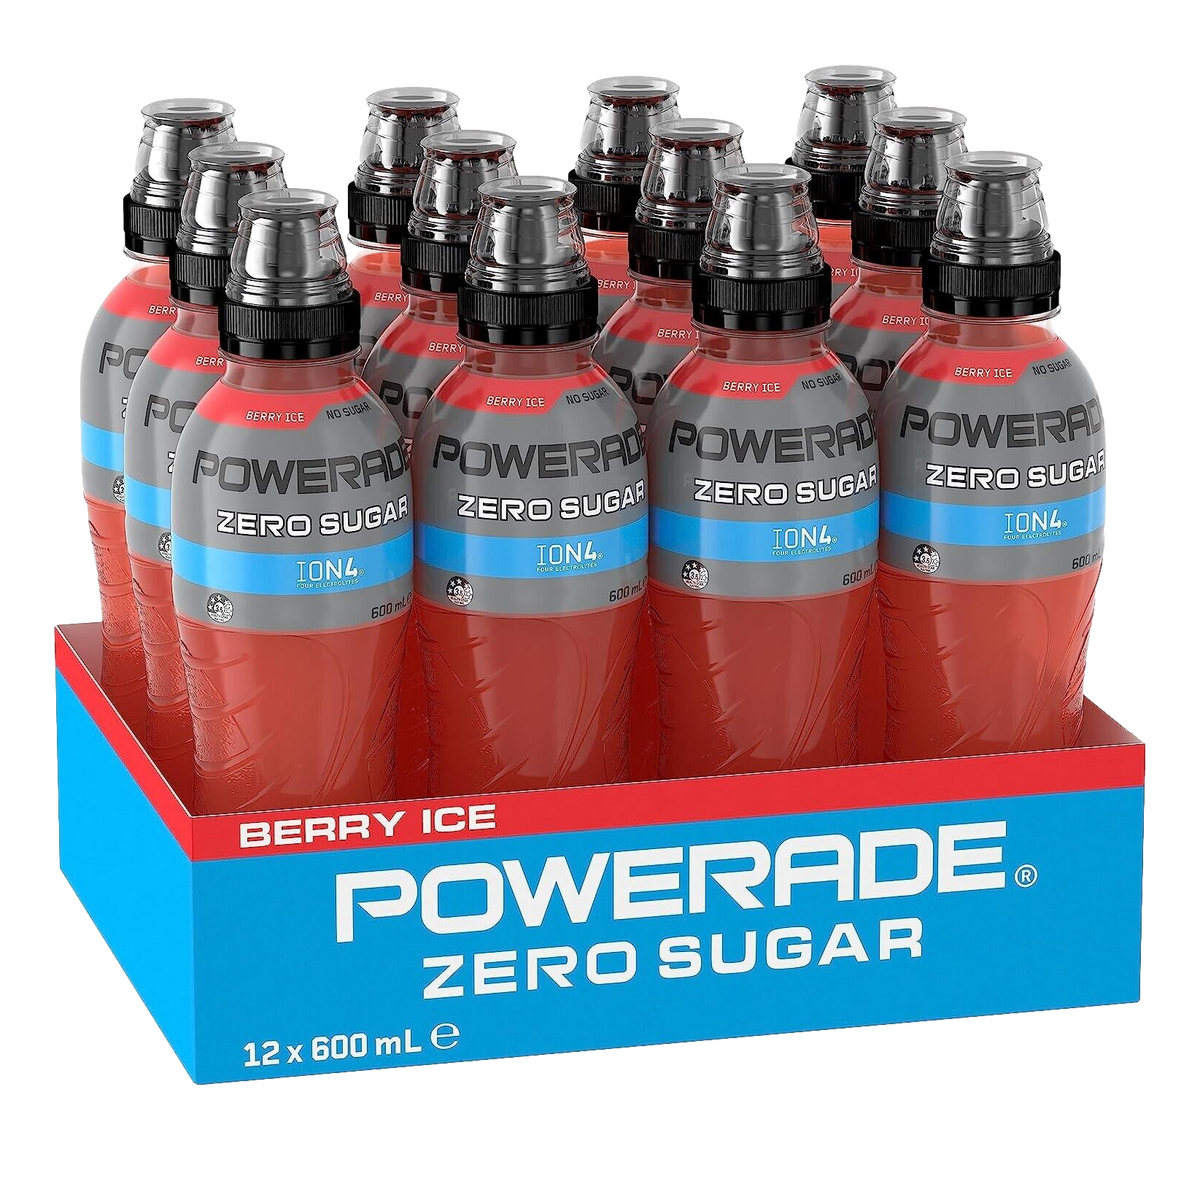 Powerade Zero Sugar Berry Ice 600ml Case of 12